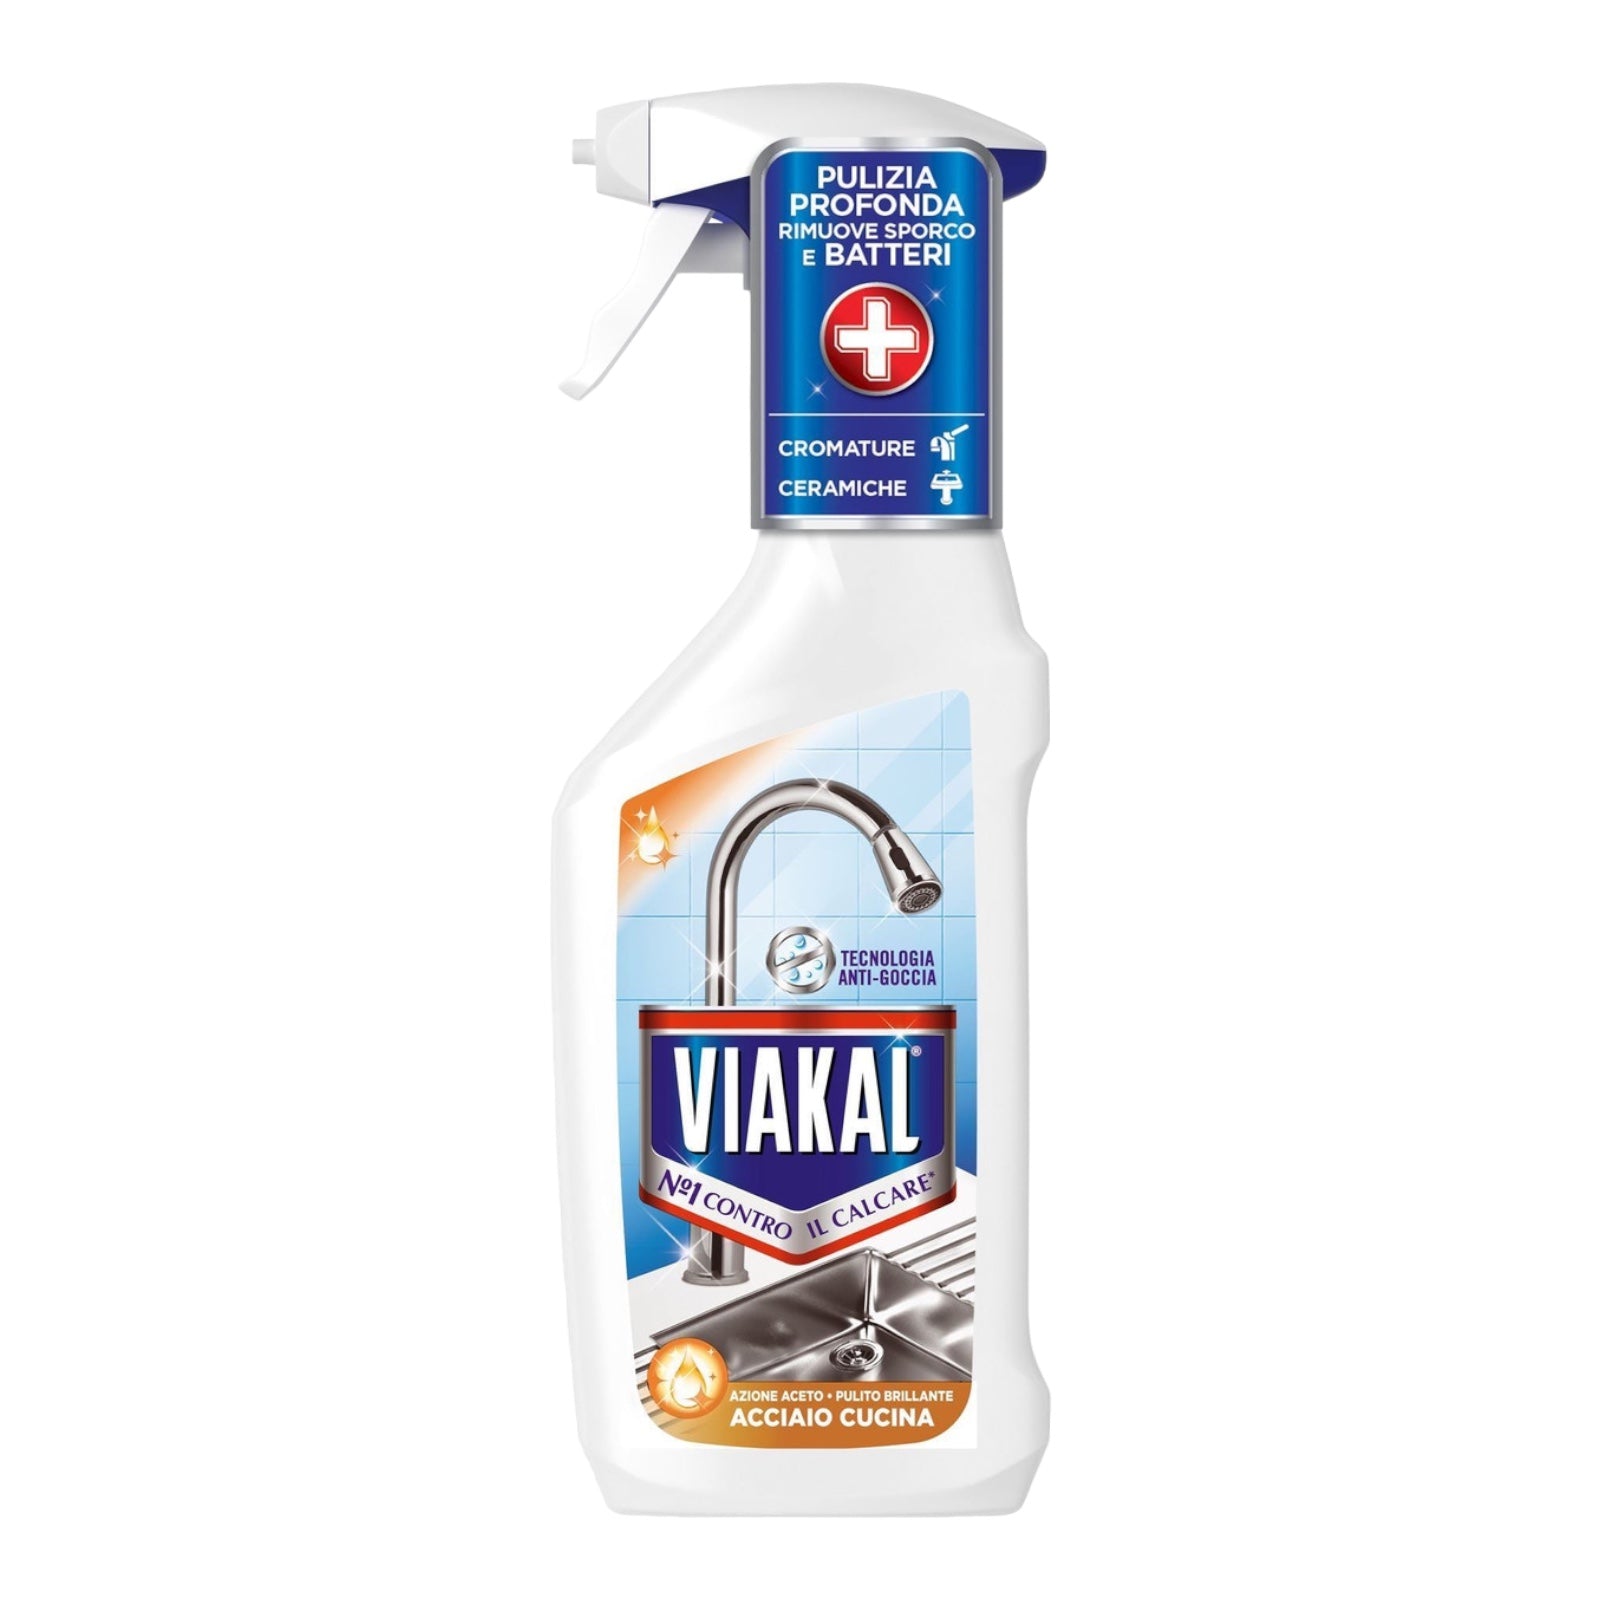 Viakal with vinegar limescale remover